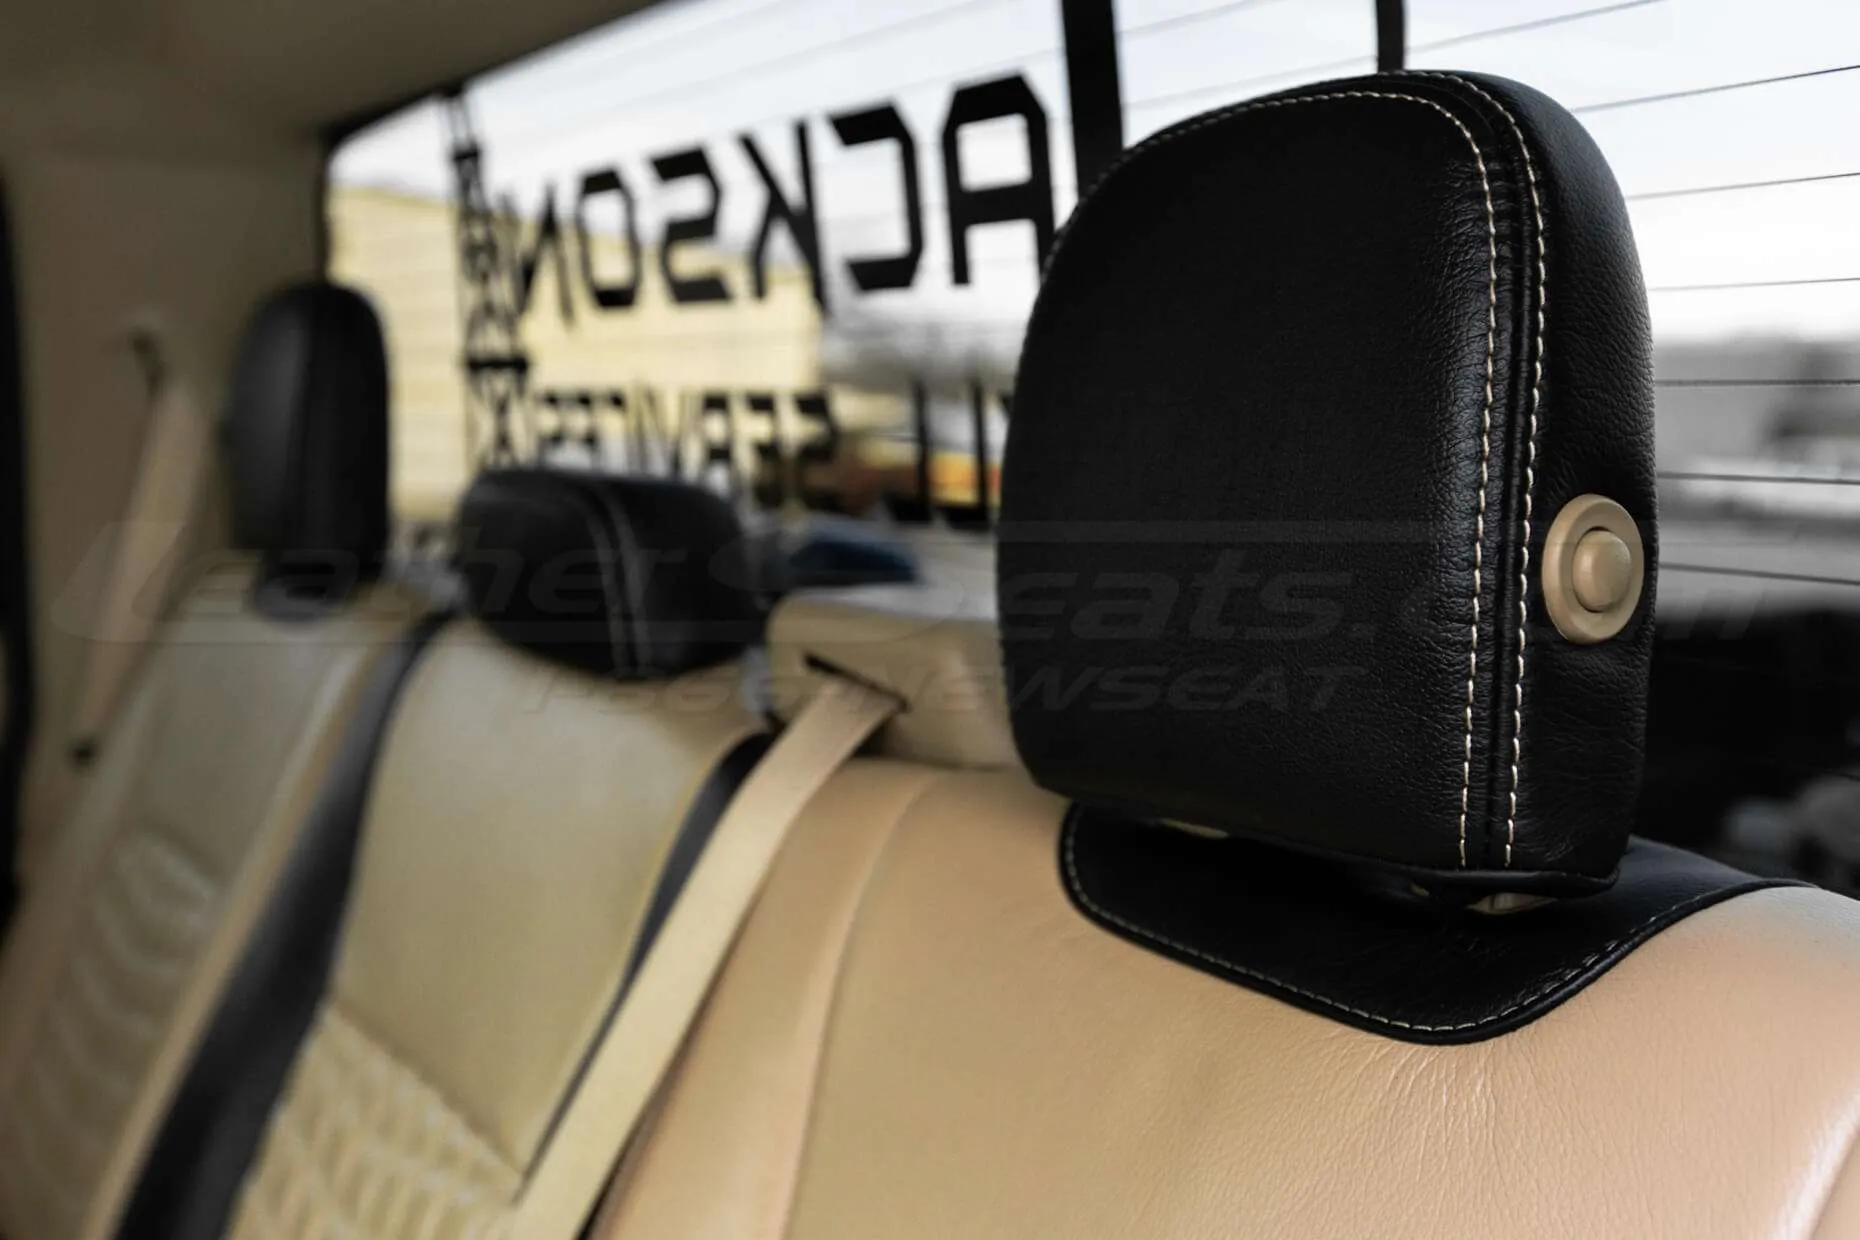 Quadrata Ford Superduty install - Back & Bisque - Headrest close-up